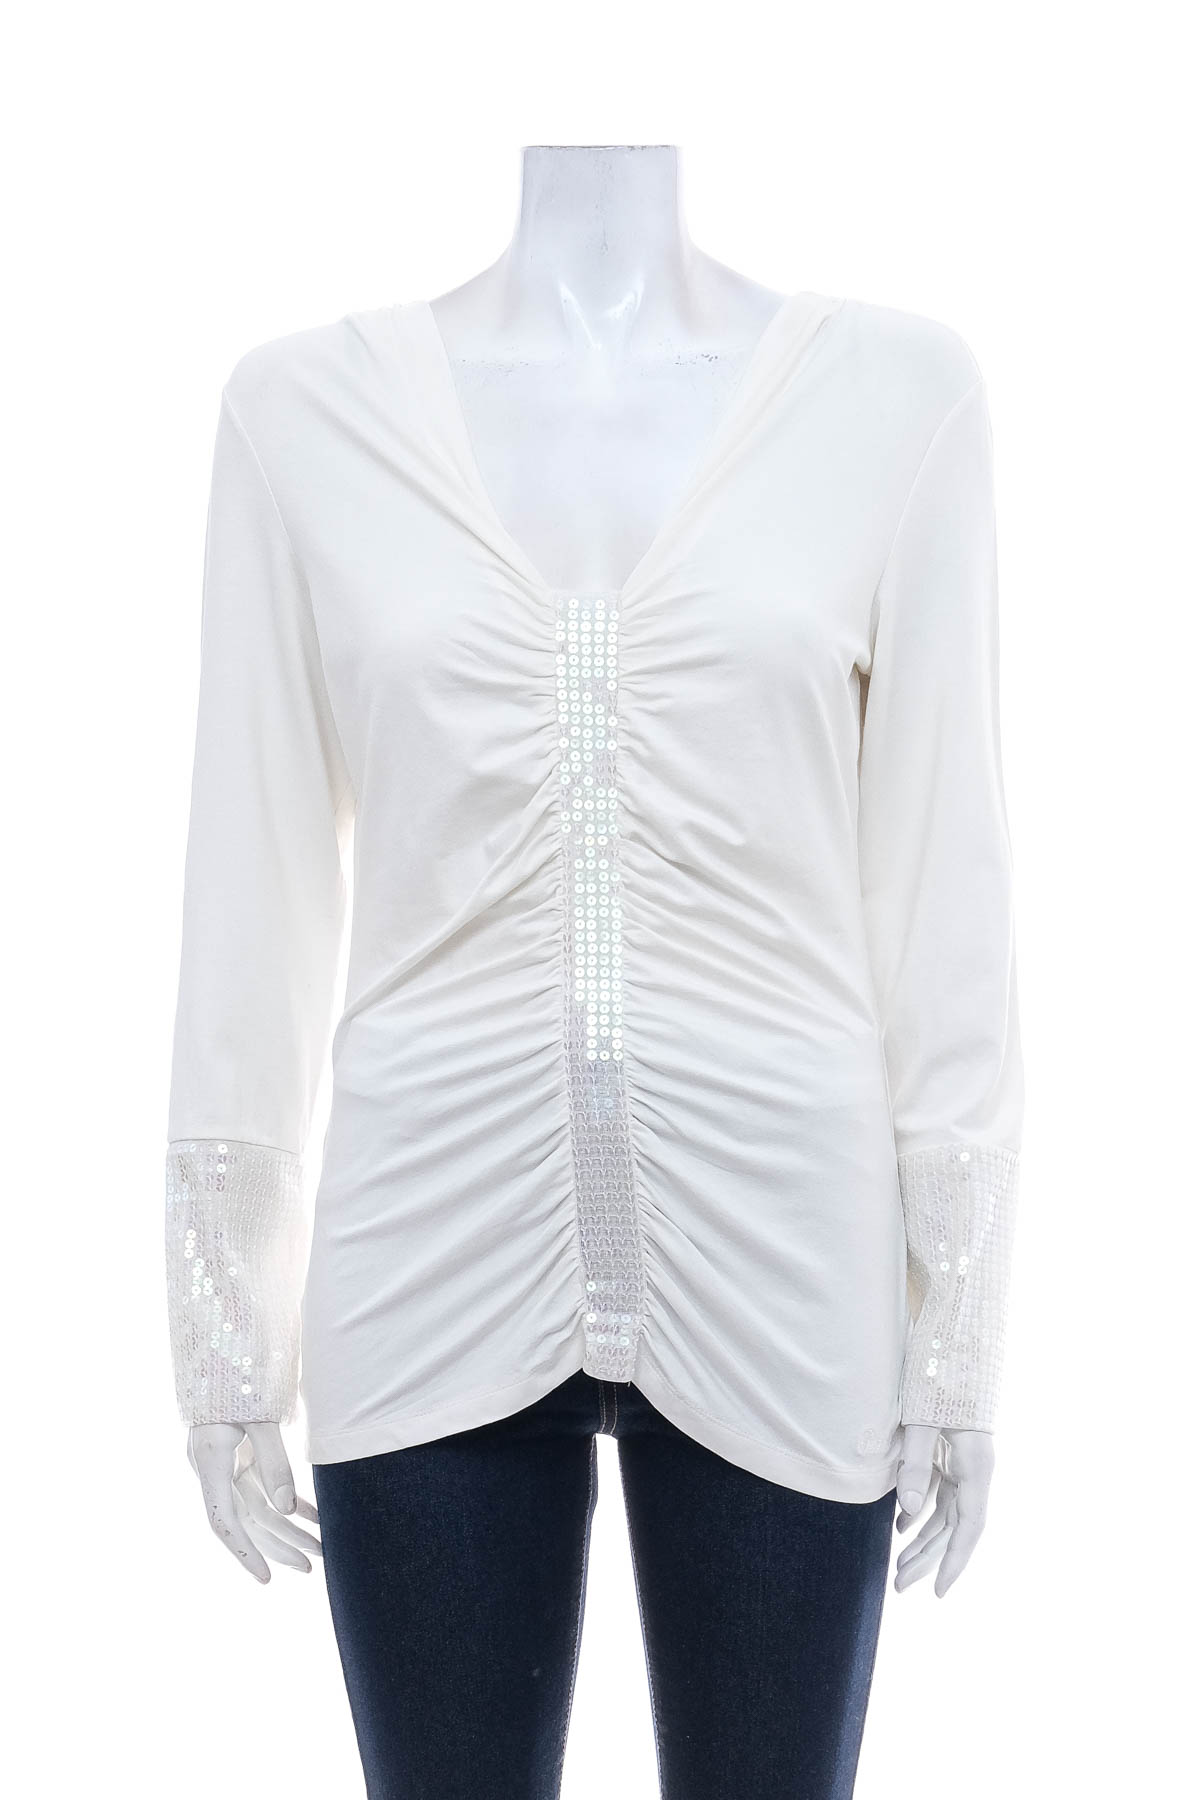 Women's blouse - Ricarda M. - 0